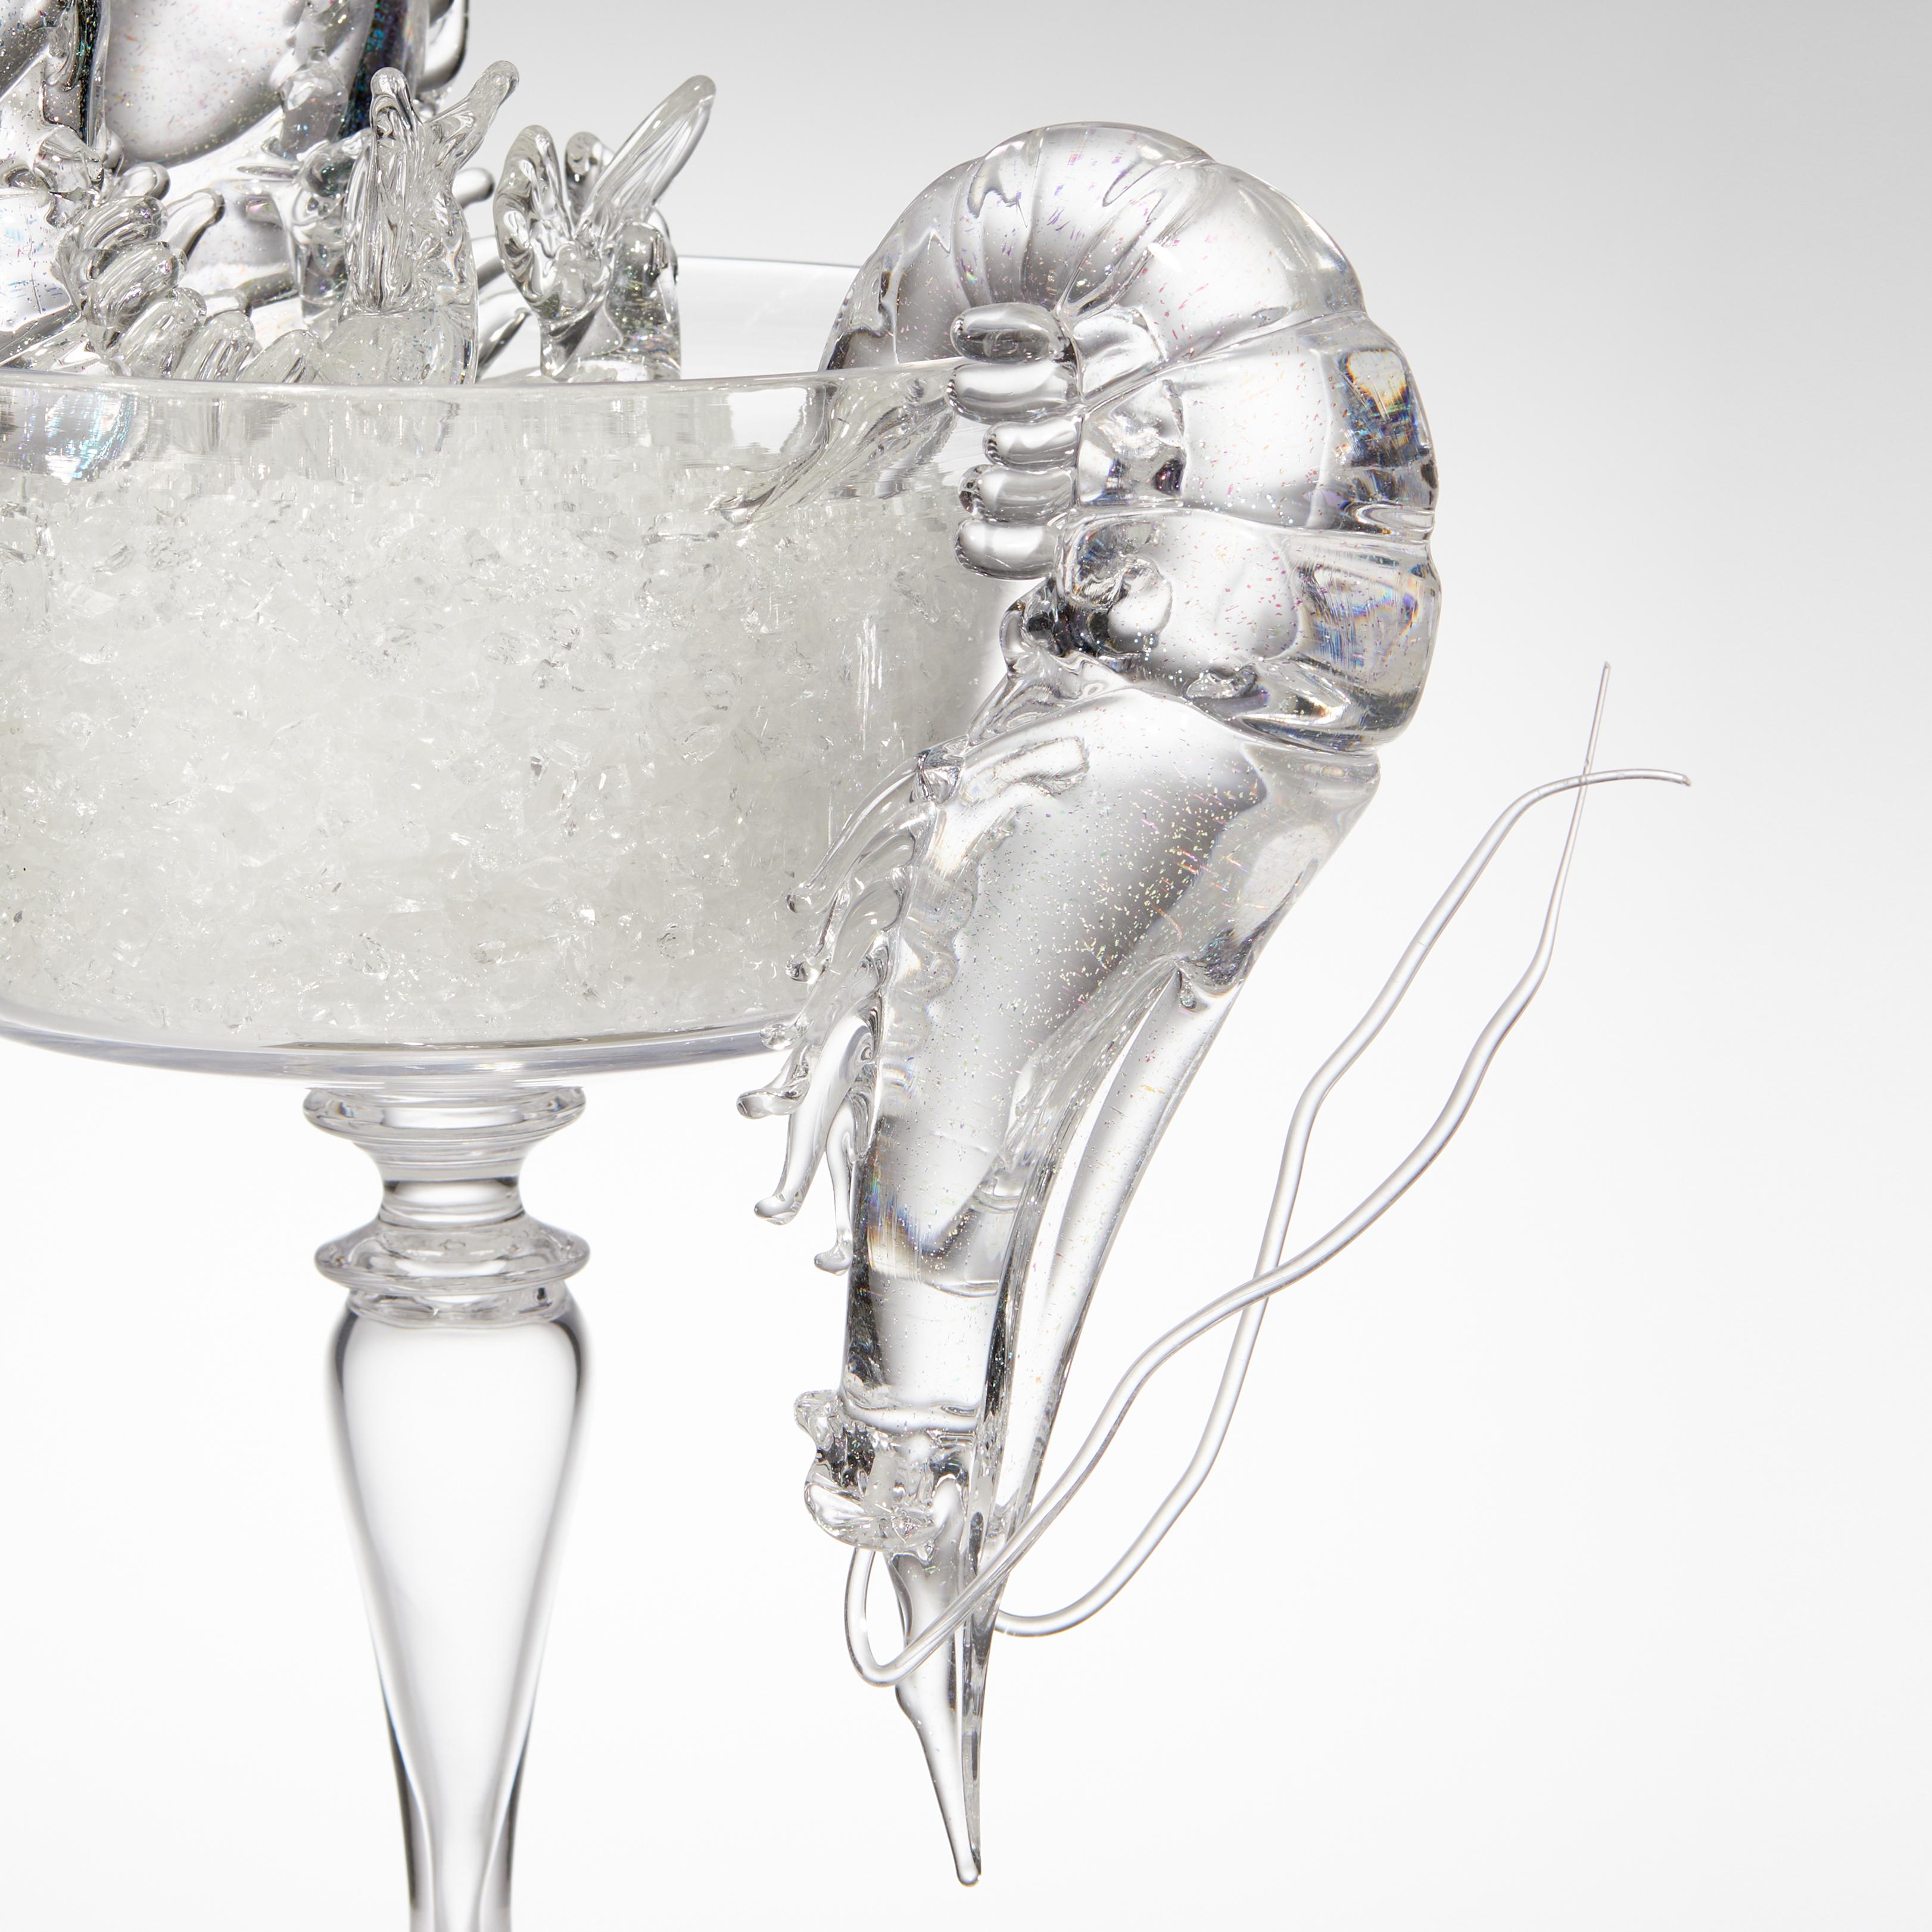 Organic Modern Still Life with Shrimp, a Clear Glass Still Life Art Work by Elliot Walker